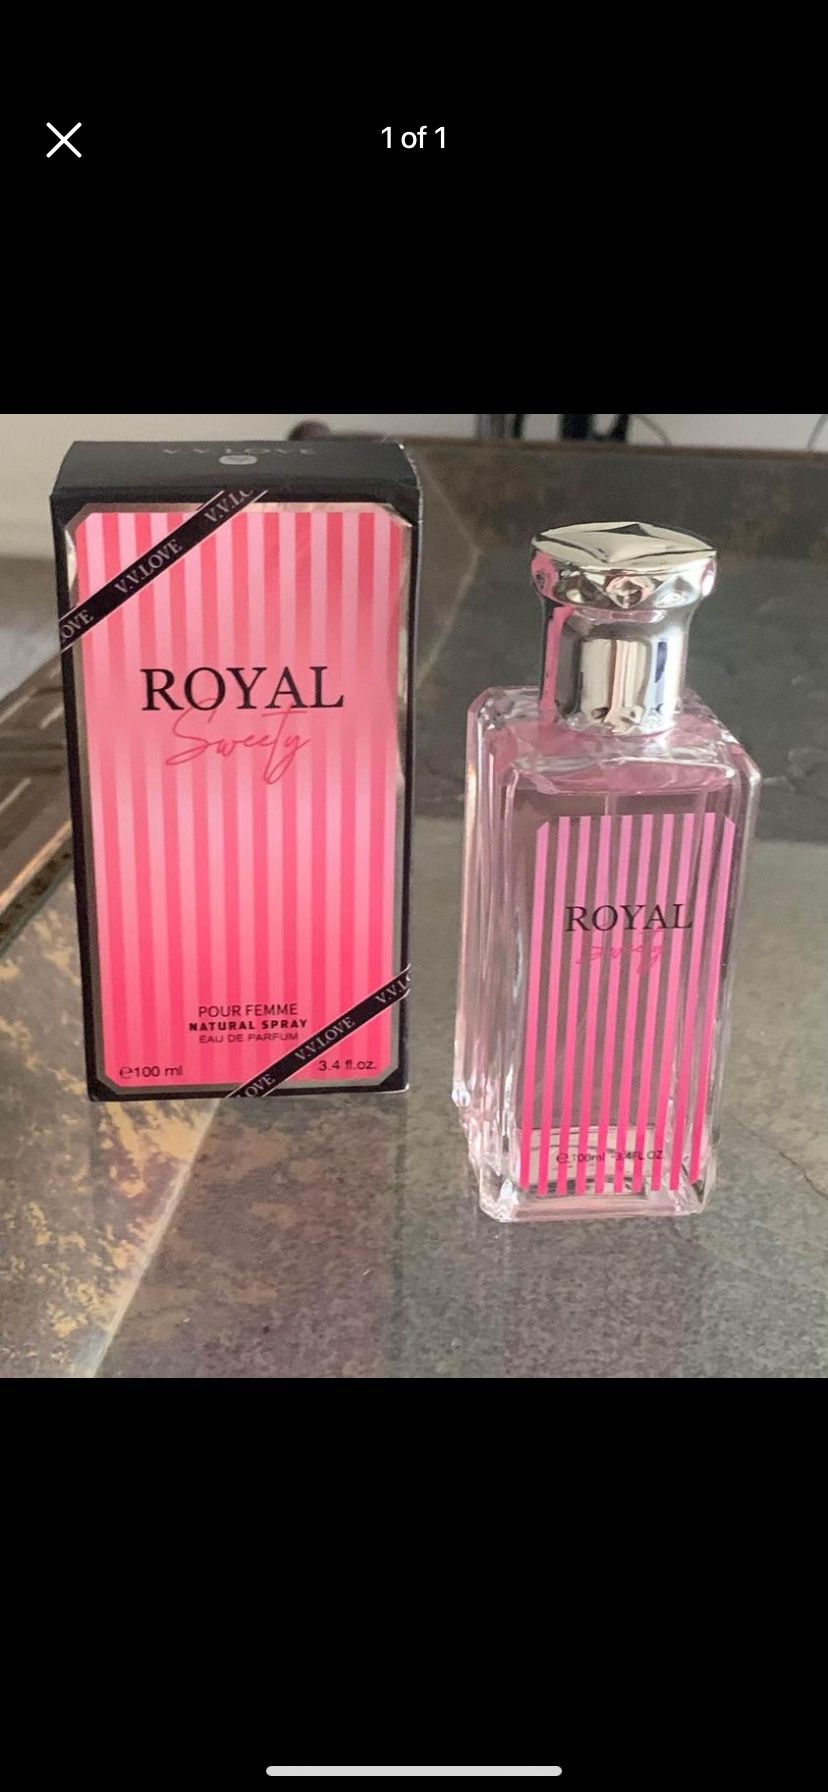 Royal perfume